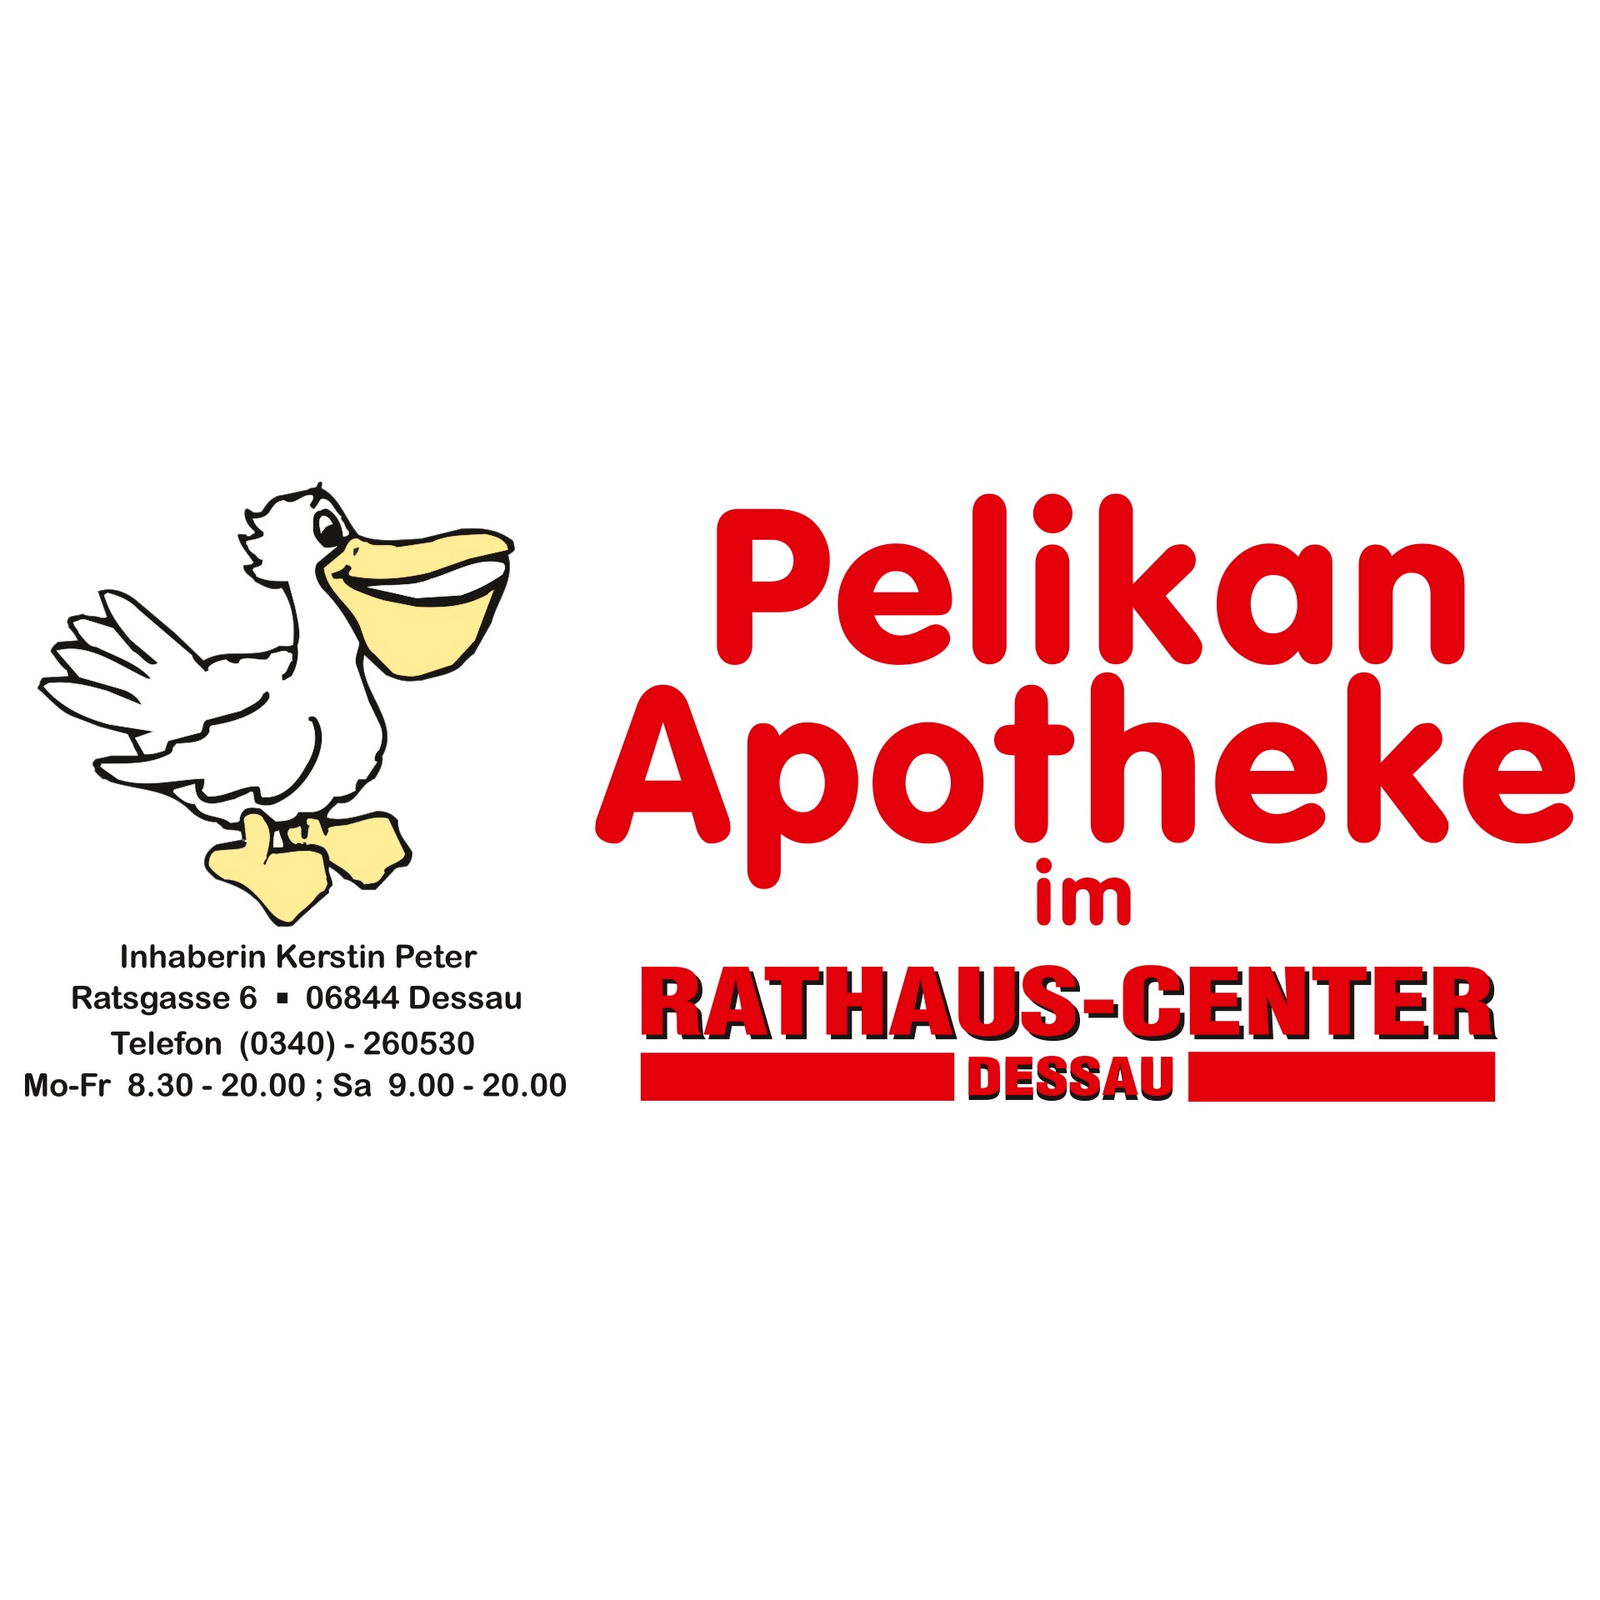 Pelikan Apotheke im Rathaus Center in Dessau-Roßlau - Logo